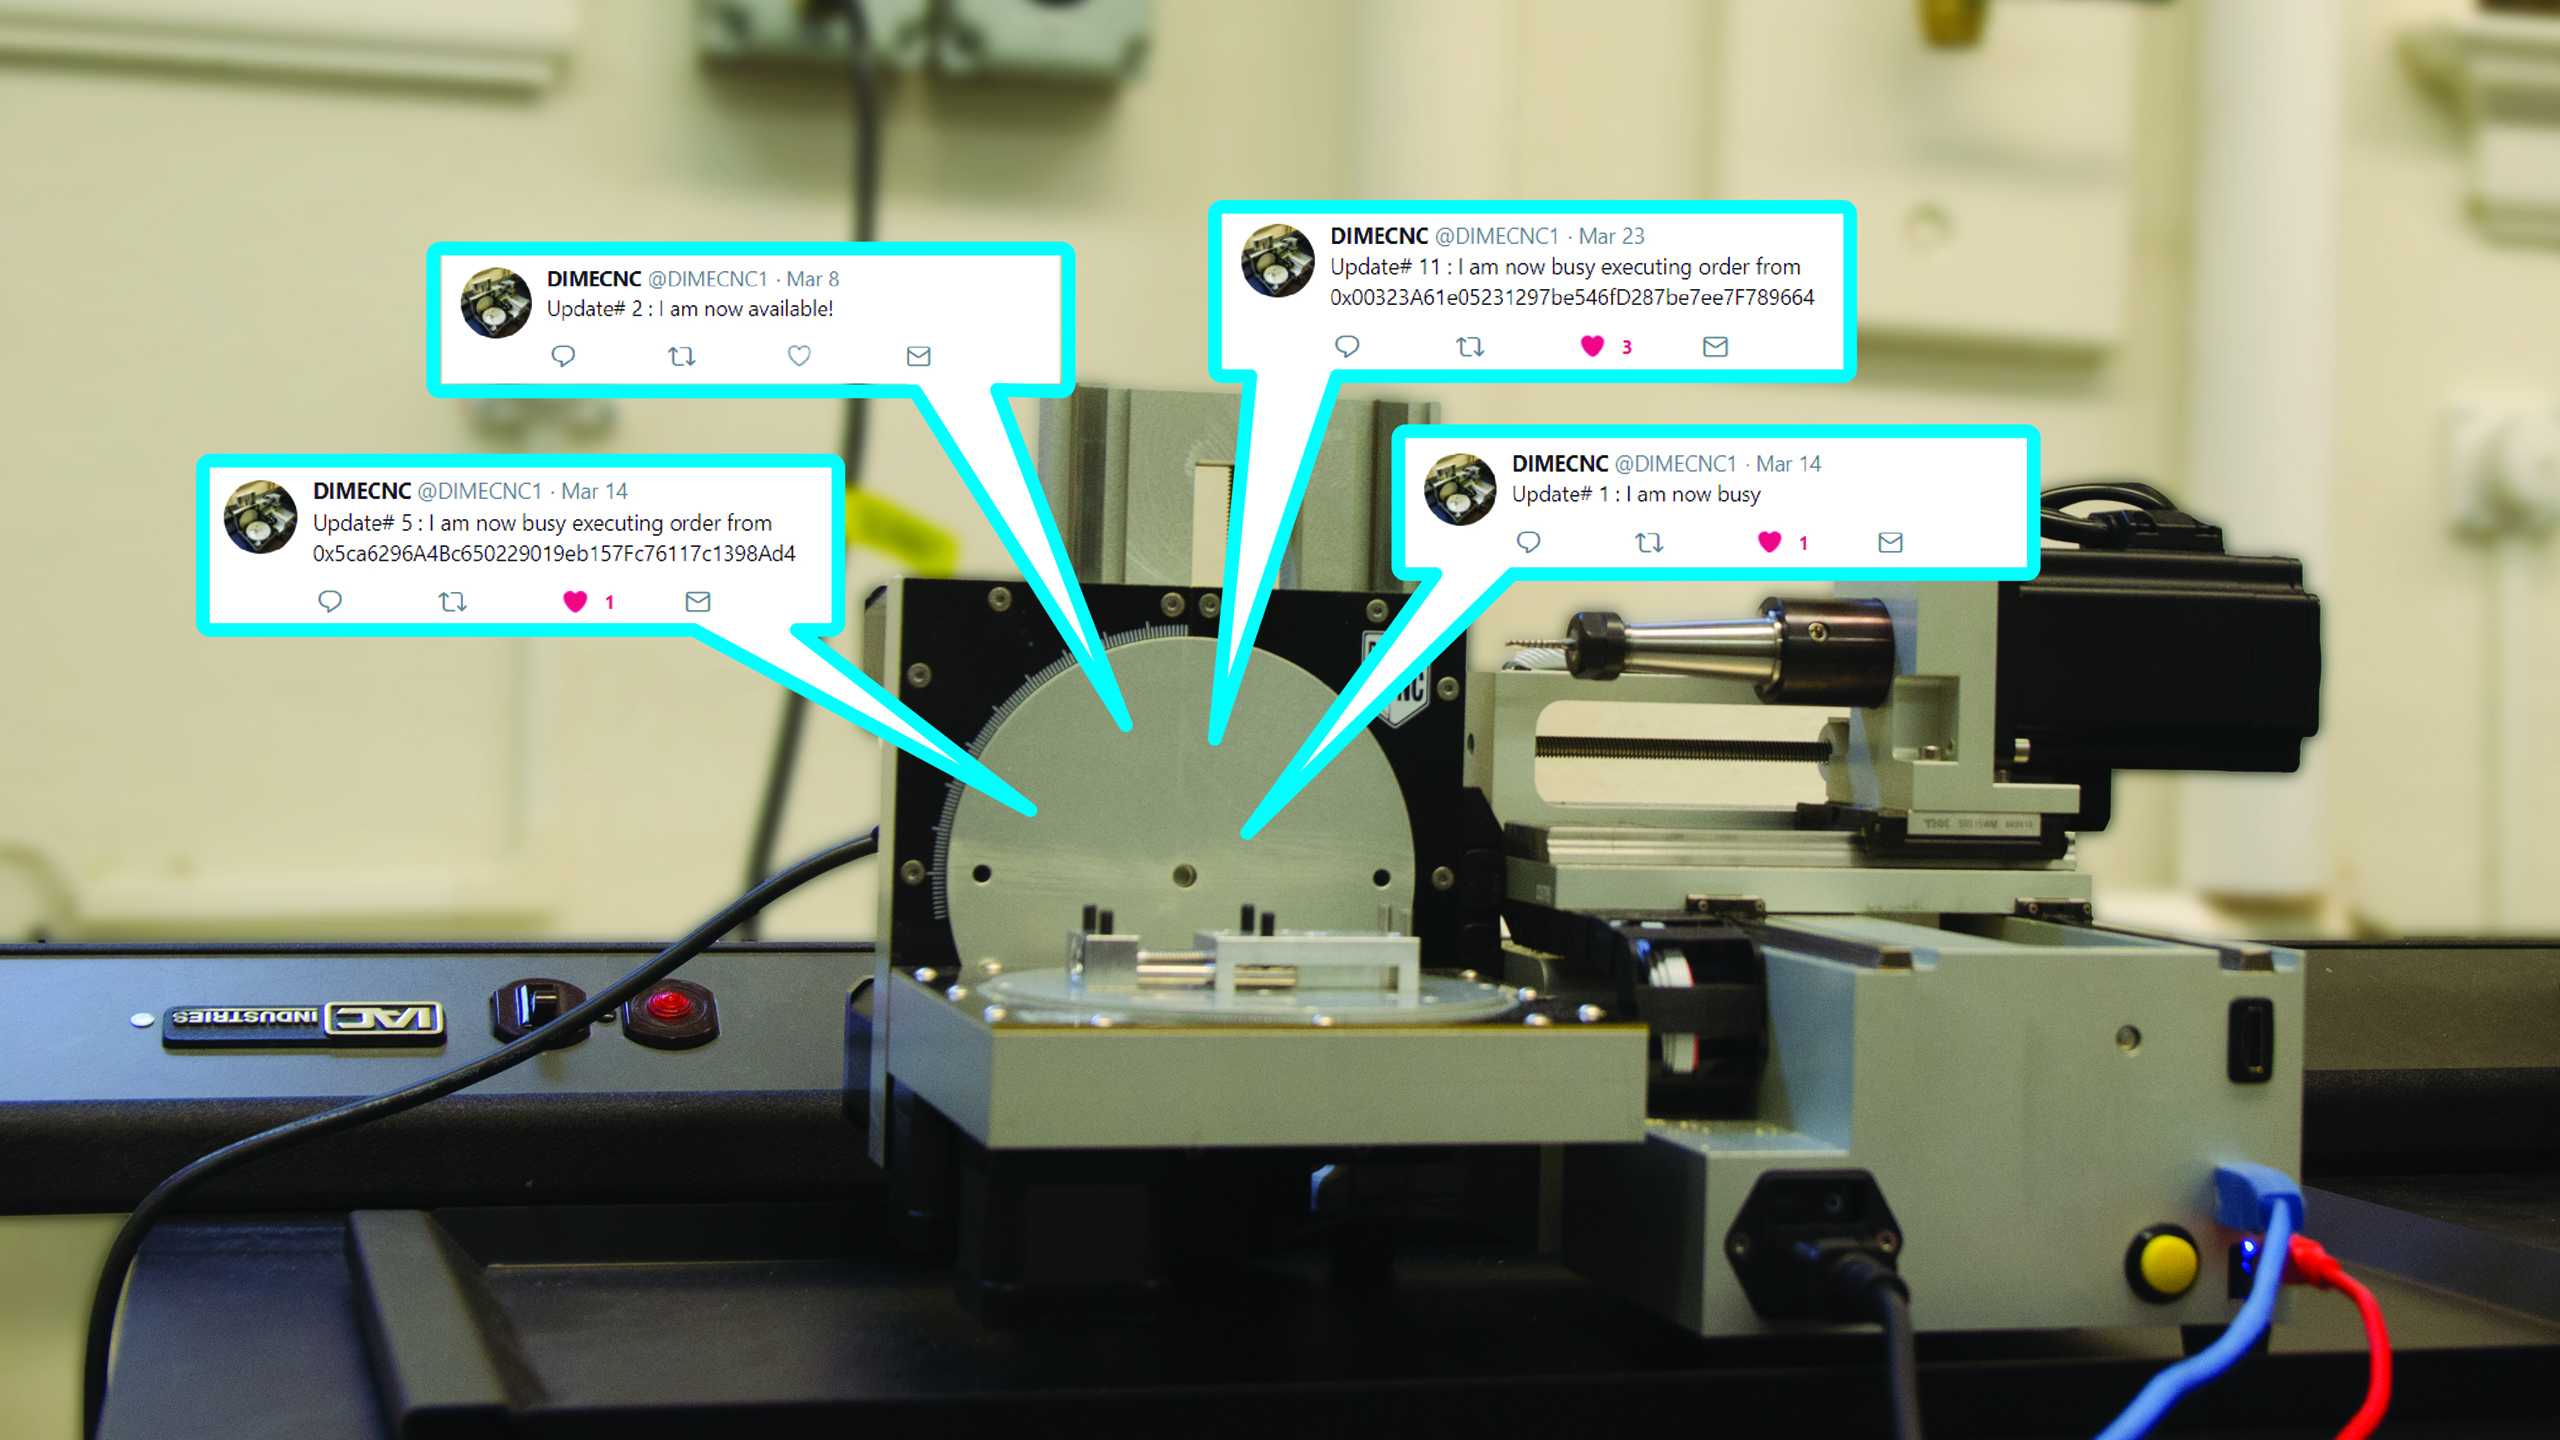 CNC Machine tweets to show its status